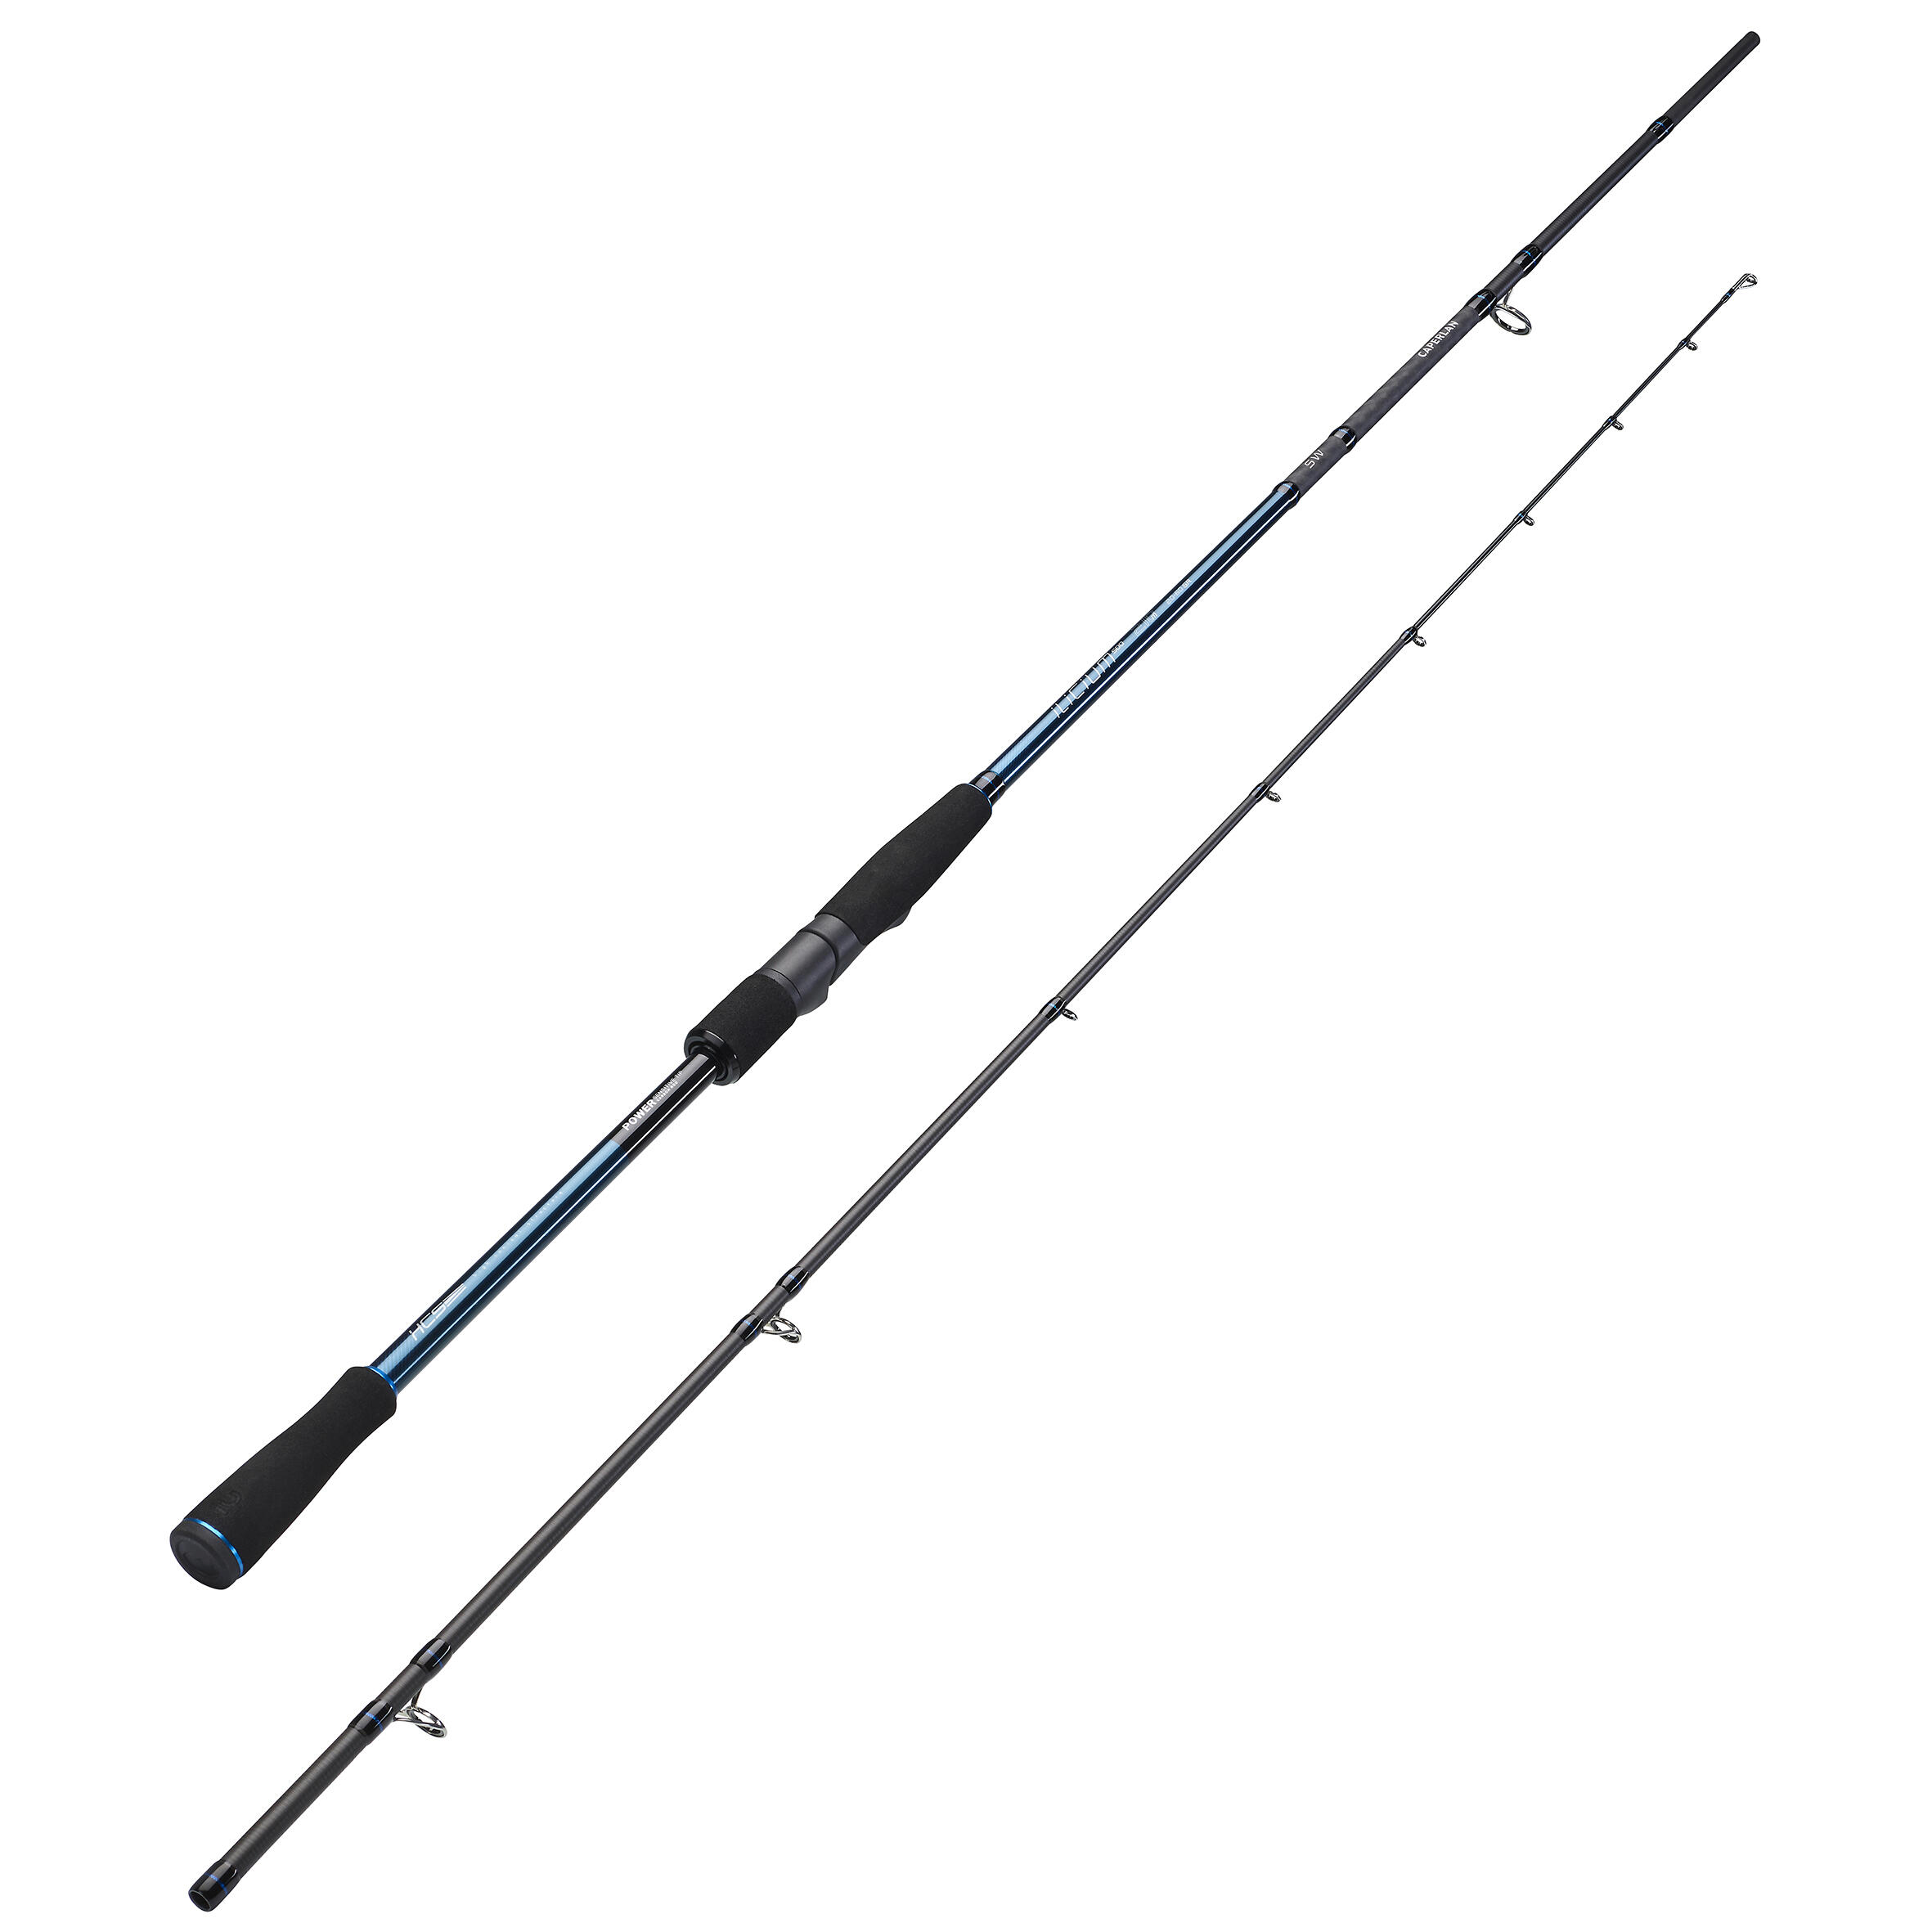 Sea Lure Fishing Rod ILCIUM-500 210 POWER 20-60 g 1/8